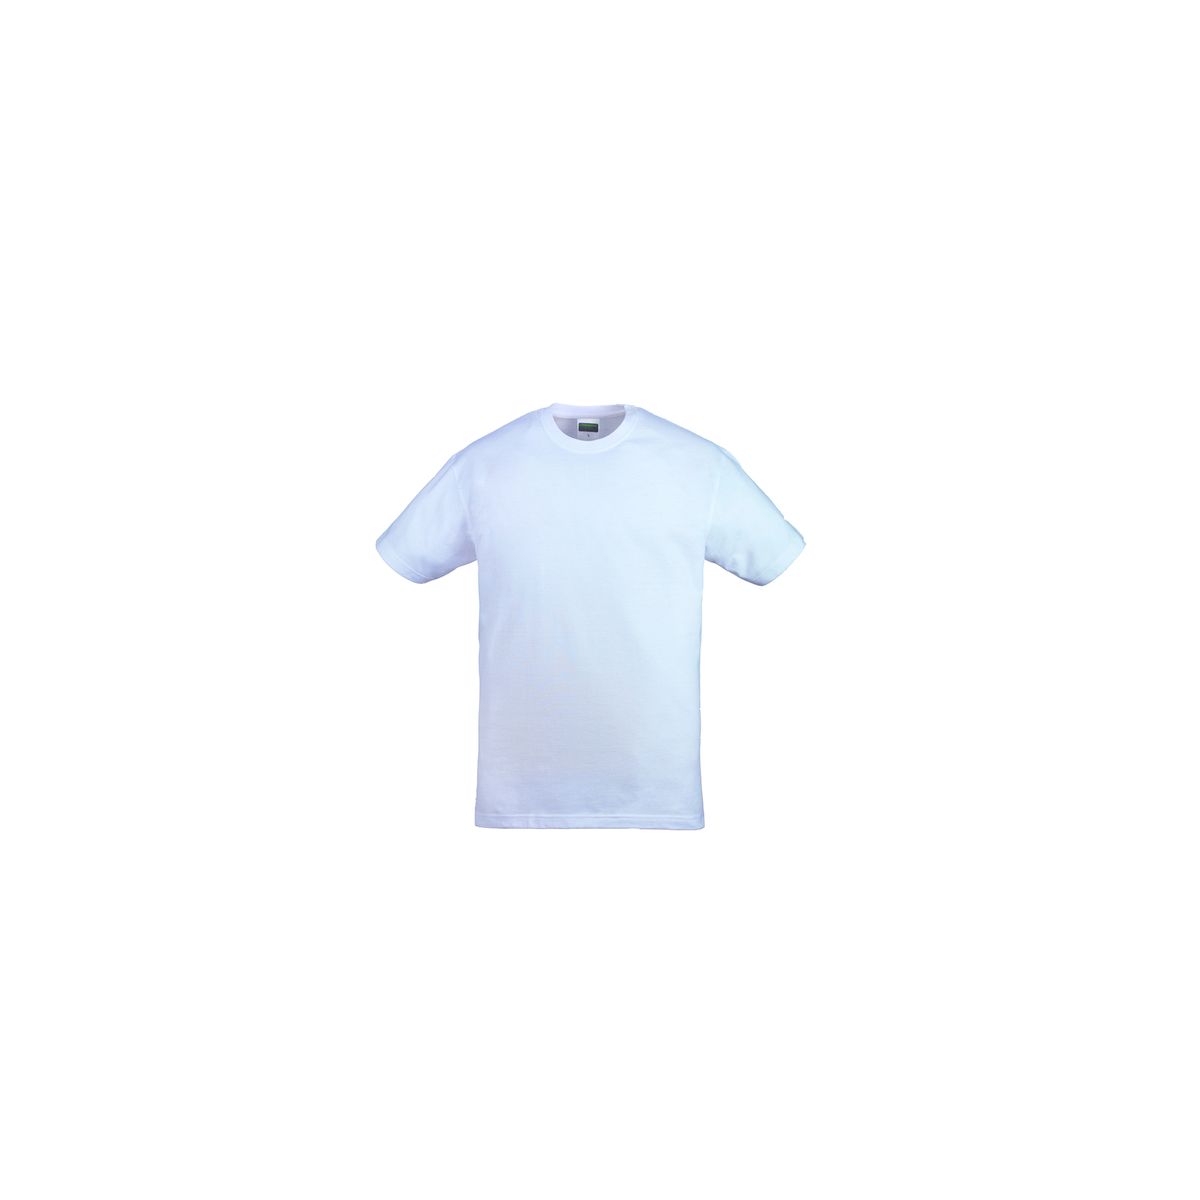 T-shirt TRIP MC blanc - COVERGUARD - Taille M 0